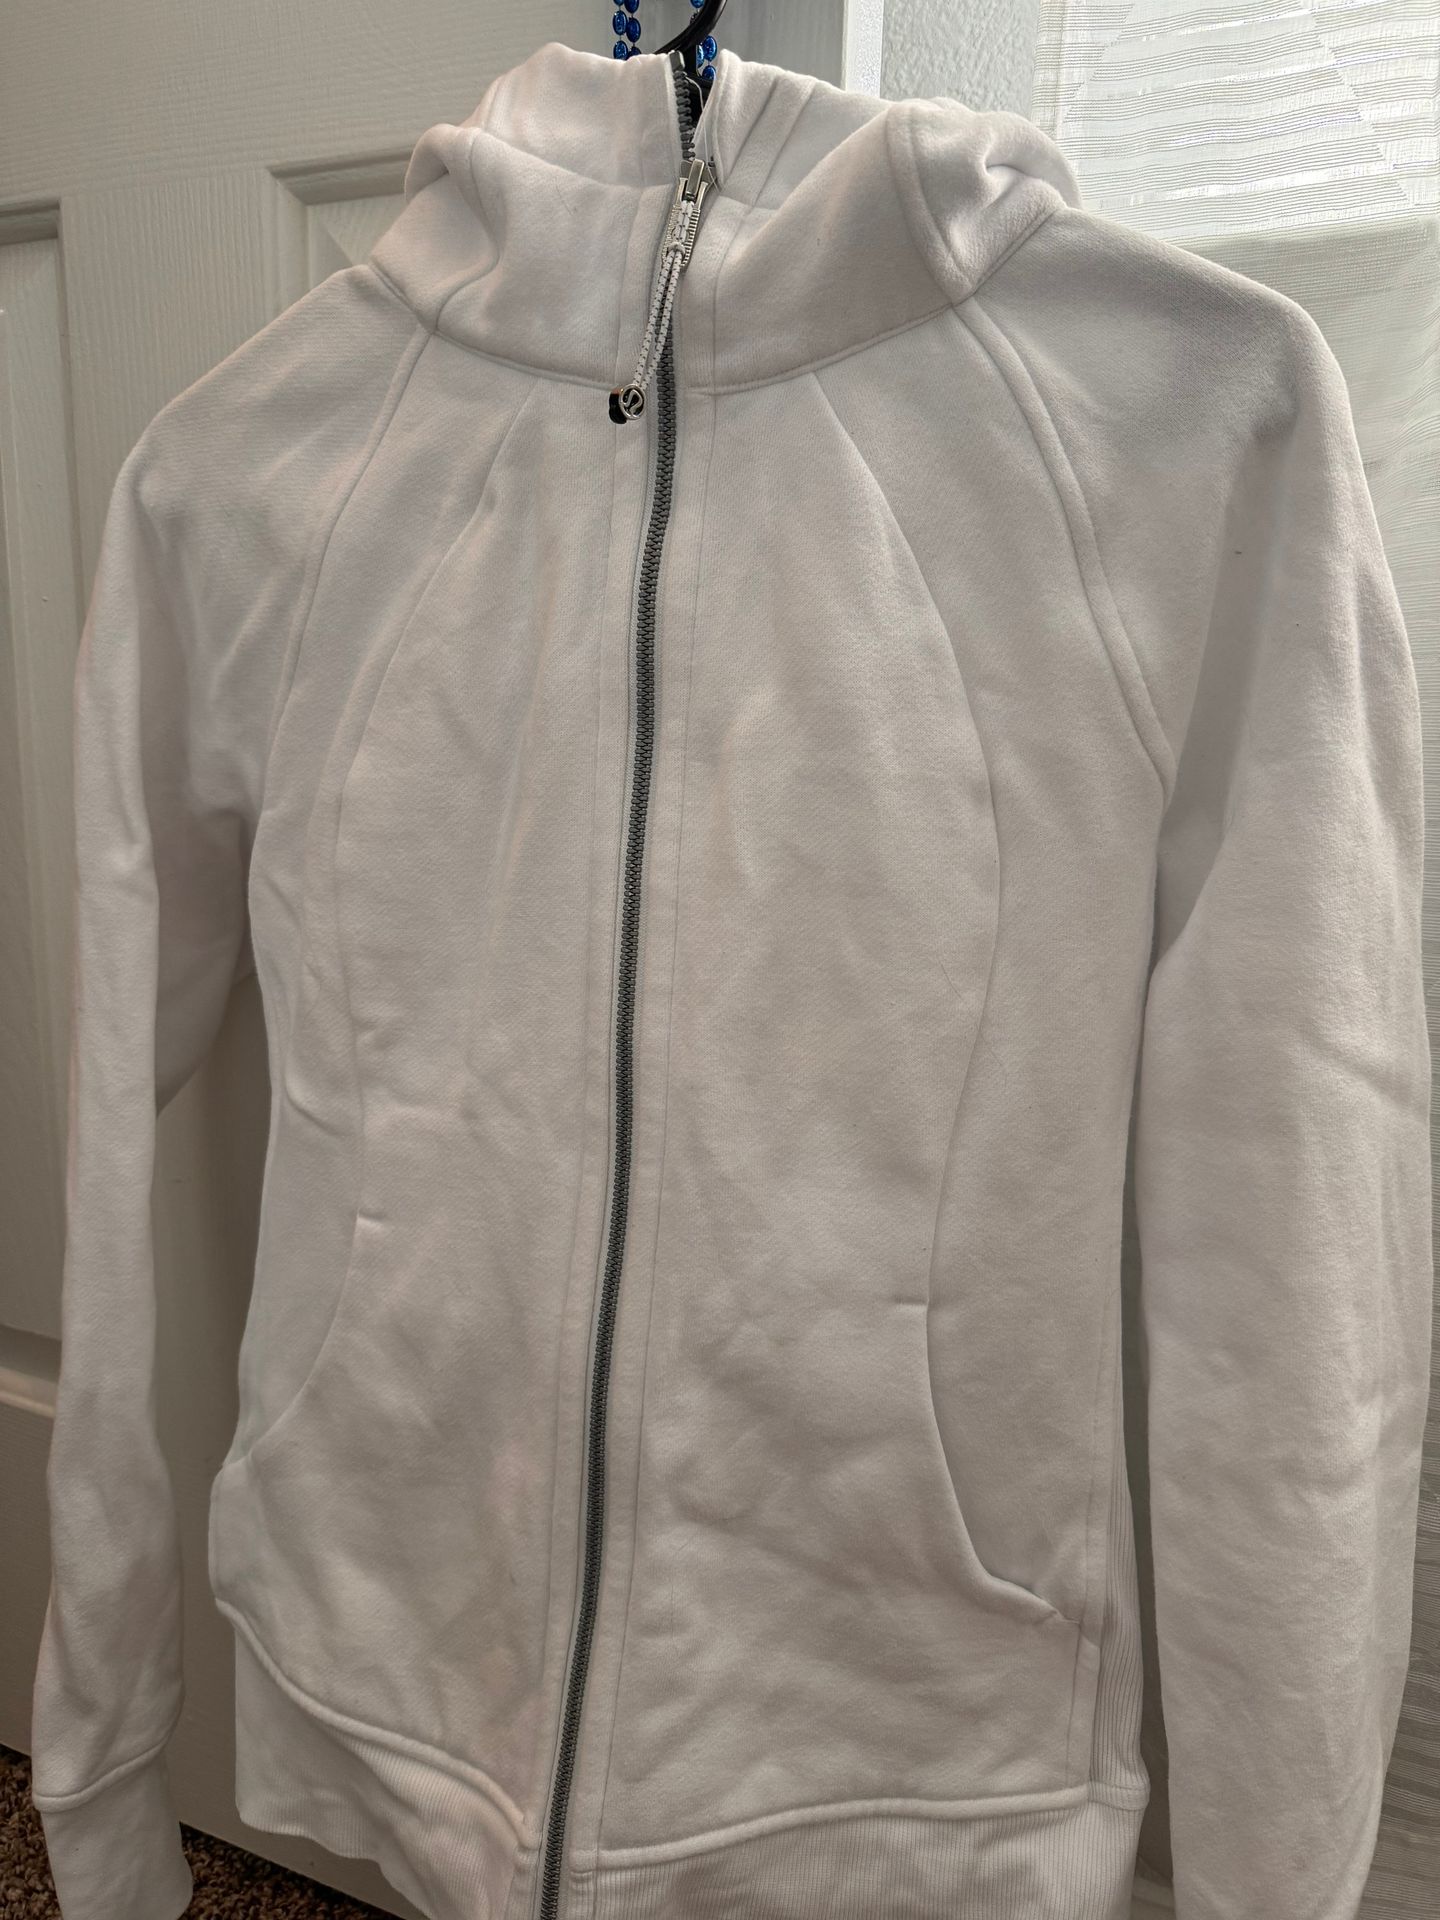 Lululemon Scuba Hoodie Jacket Zip-Up White Size 6 - $38 (67% Off Retail) -  From Kea